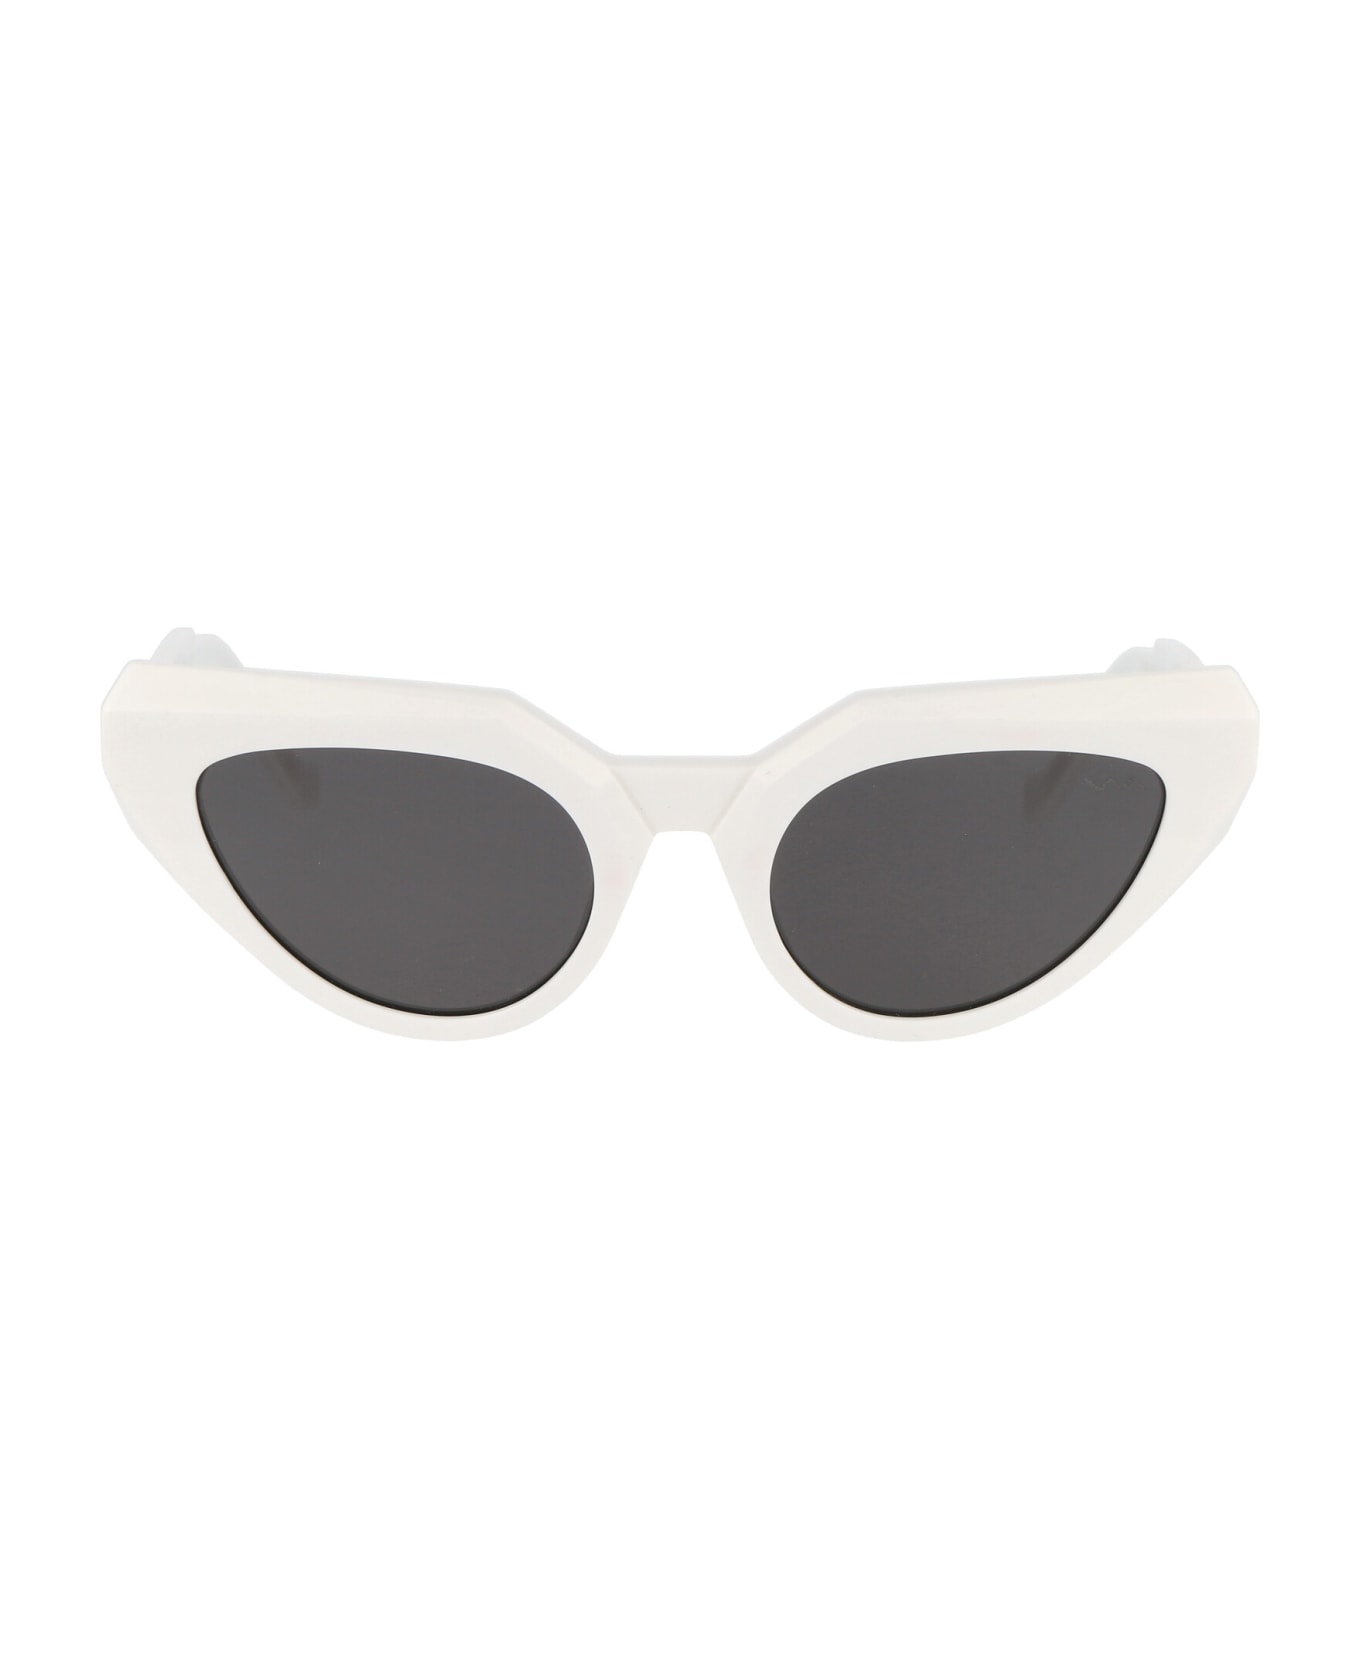 VAVA Bl0028 Sunglasses - Black Victimy Sunglasses